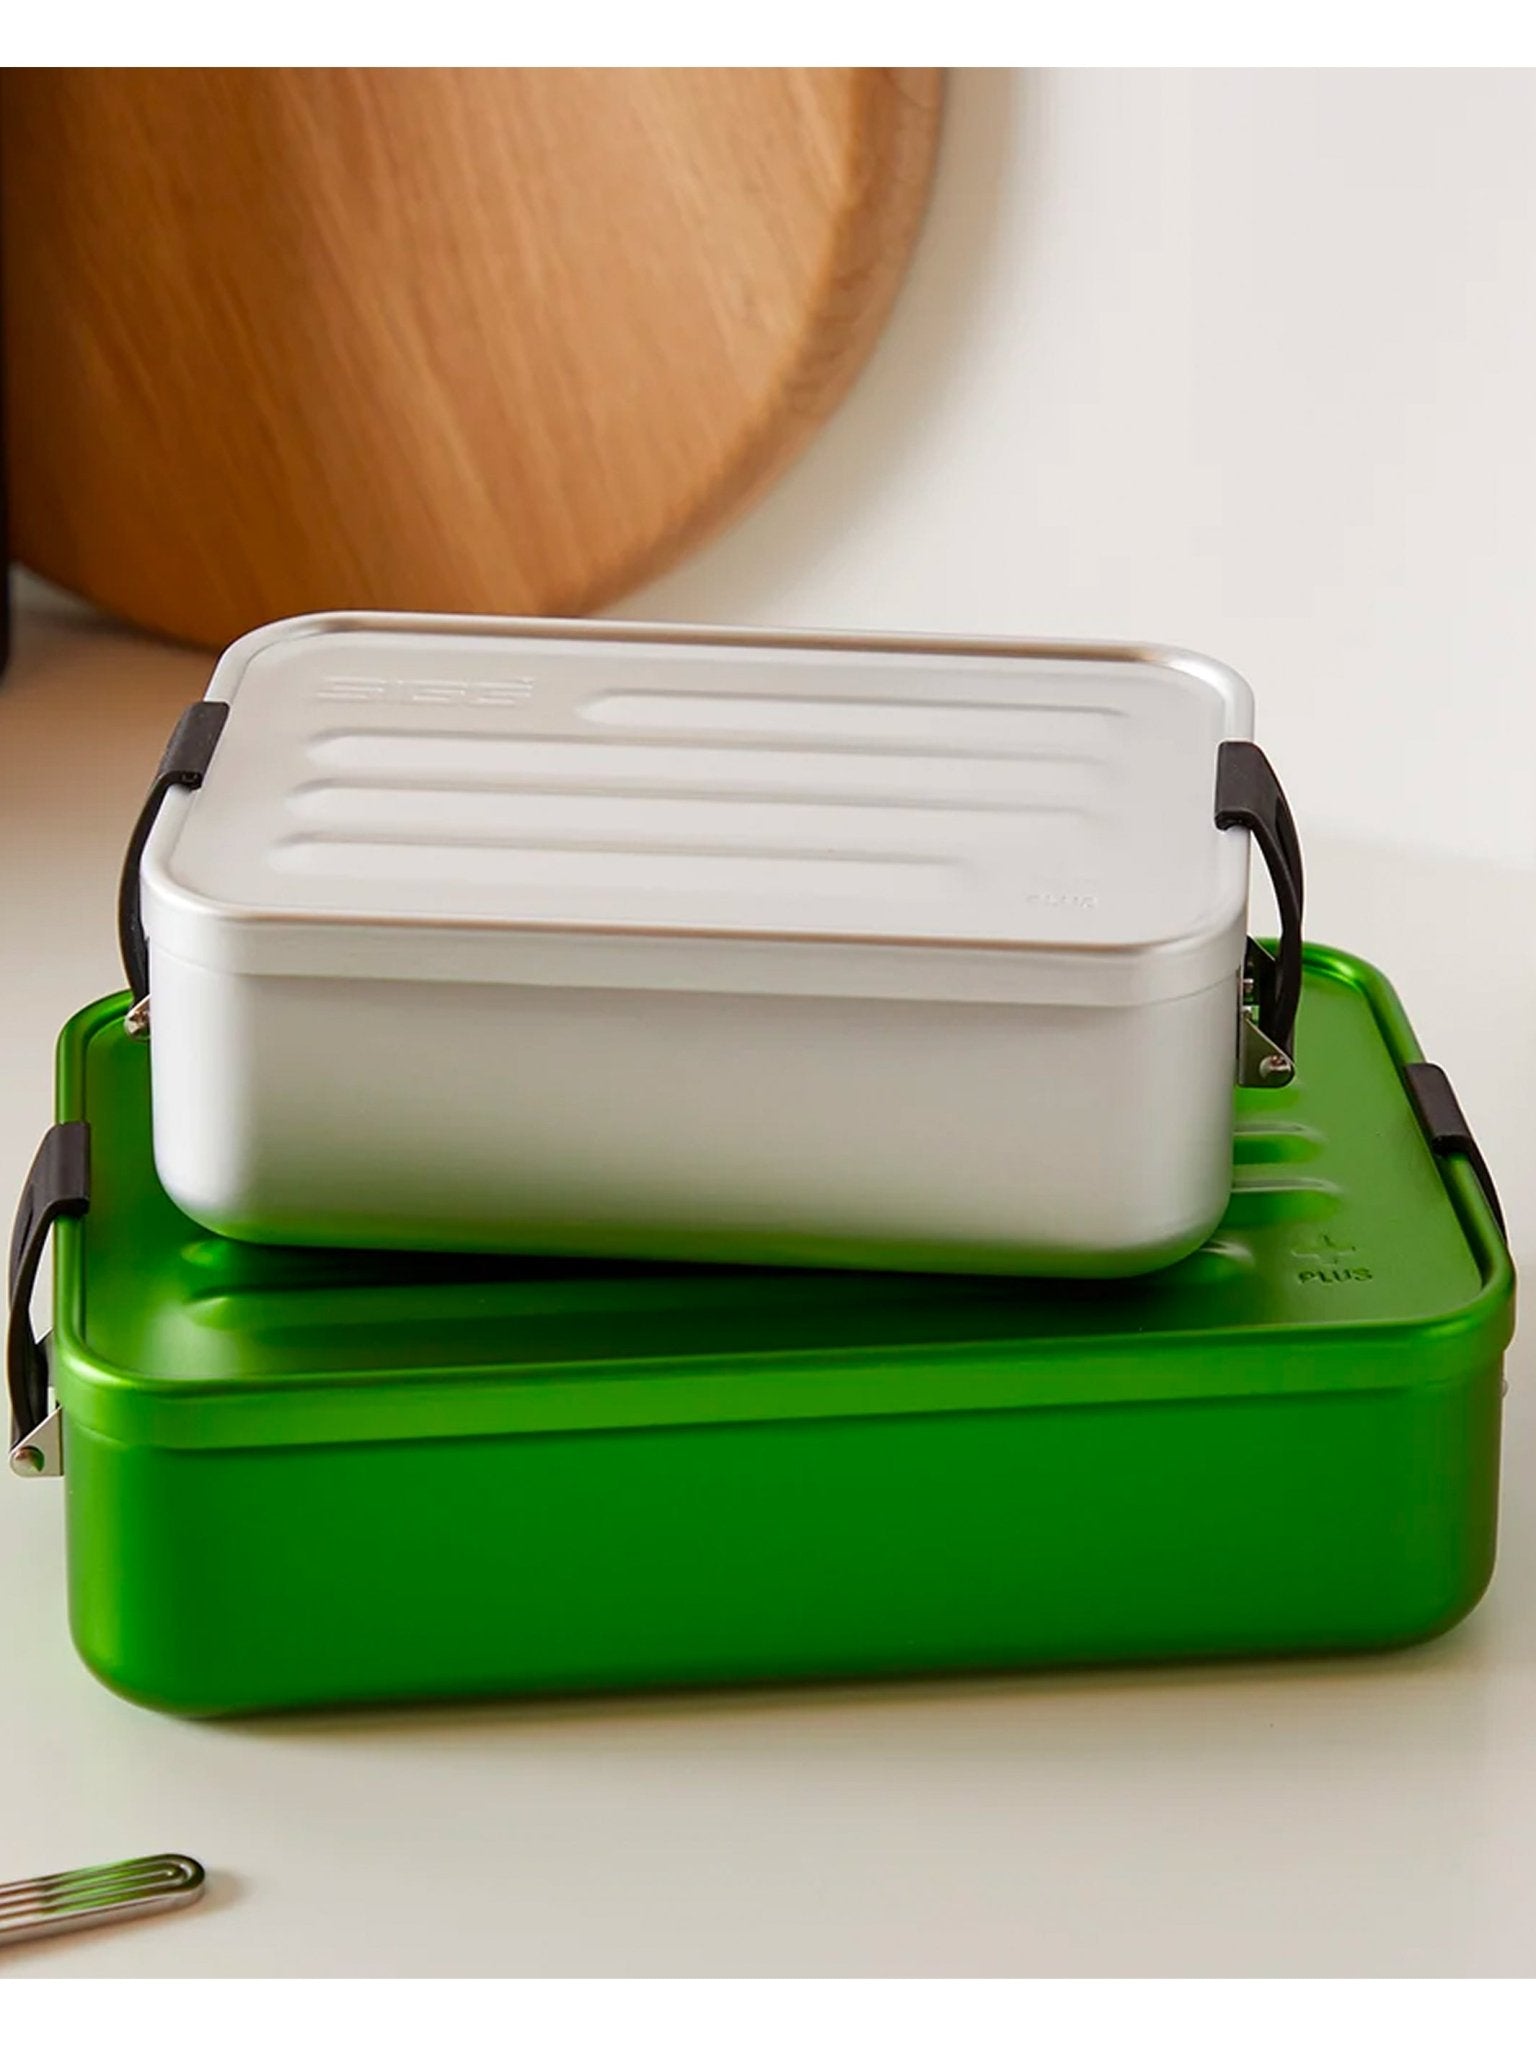 4elementsclothingSiggSIGG - Premium Lunch box Plus Featherlight / Lunchbox Sigg metal lunchboxWater Bottles8697.3